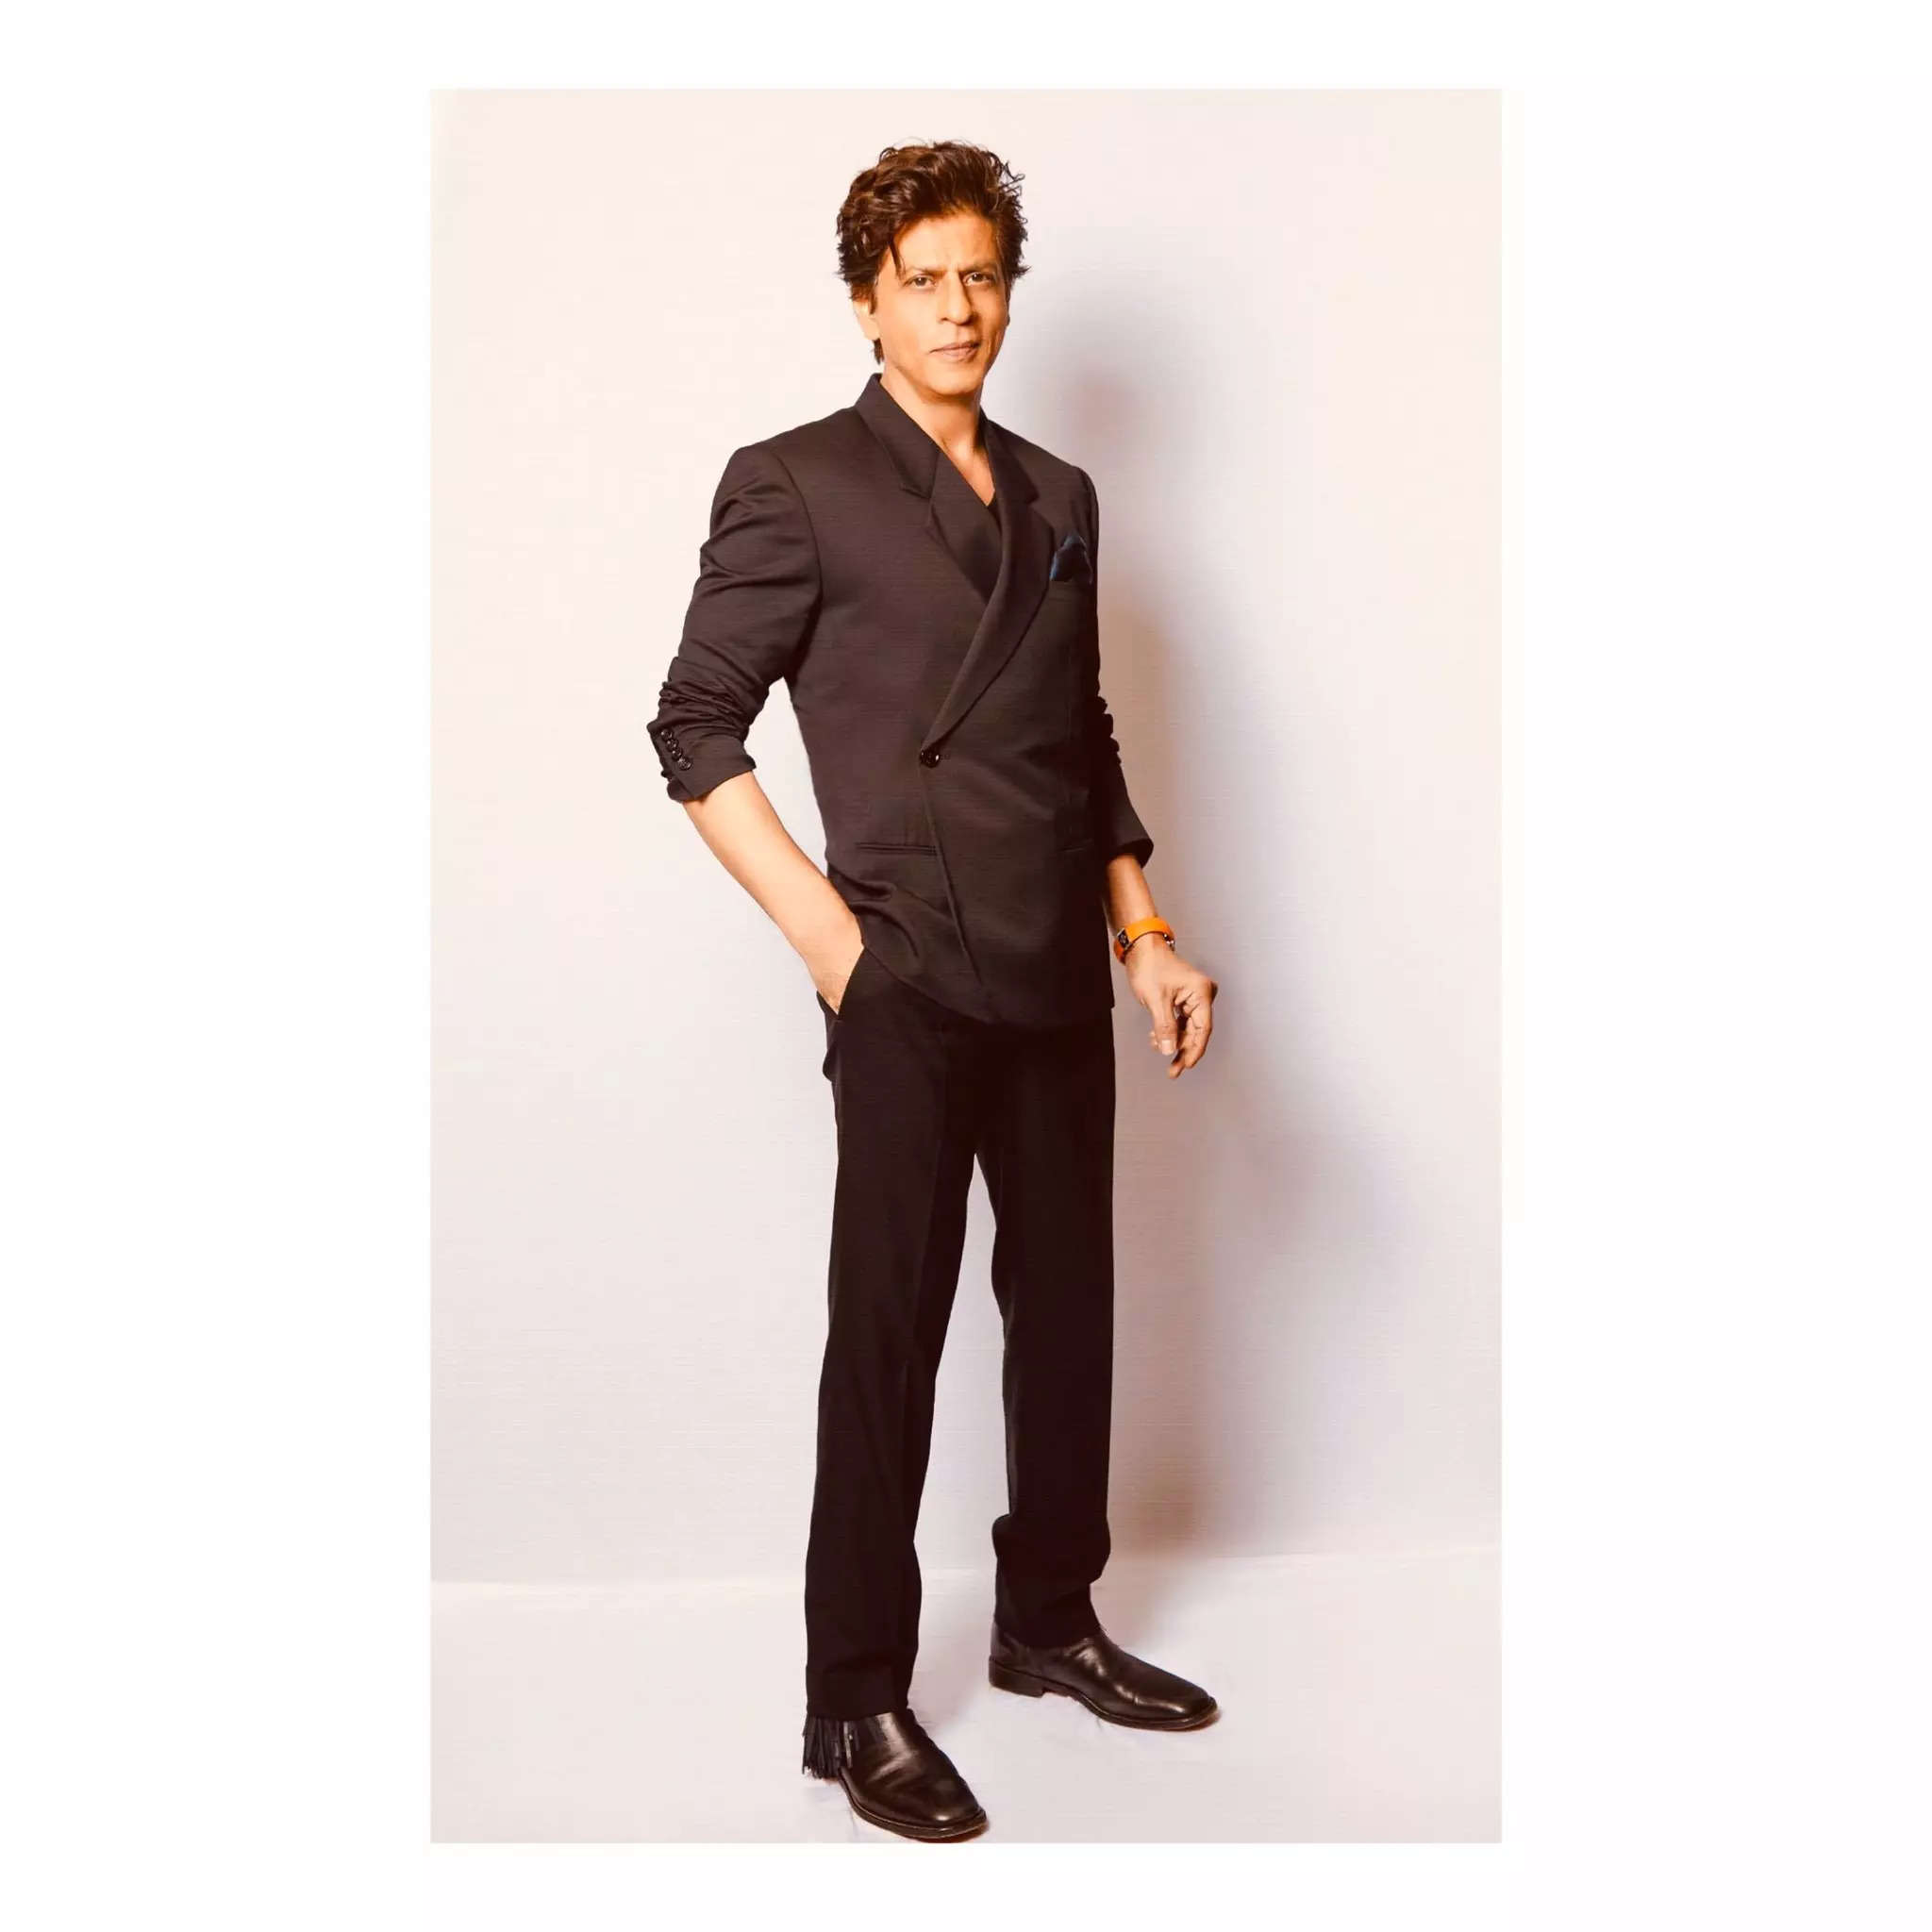 6 unimaginably expensive things in Shah Rukh Khan's wardrobe ...